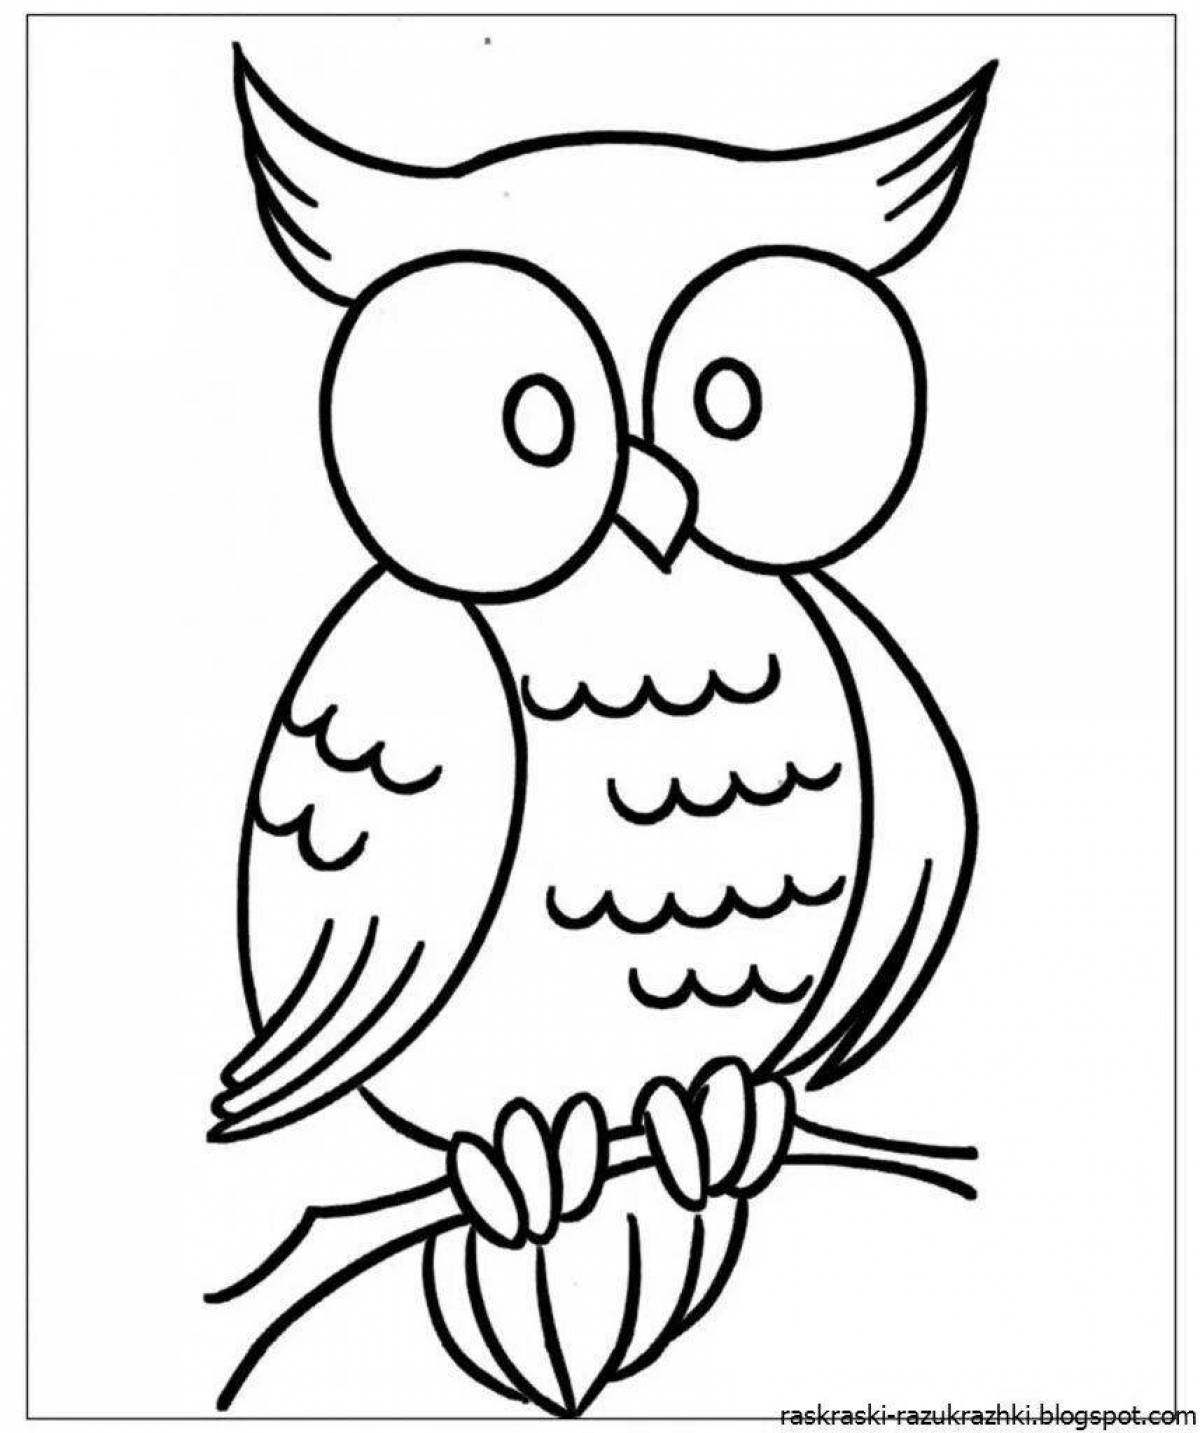 Odd owl coloring